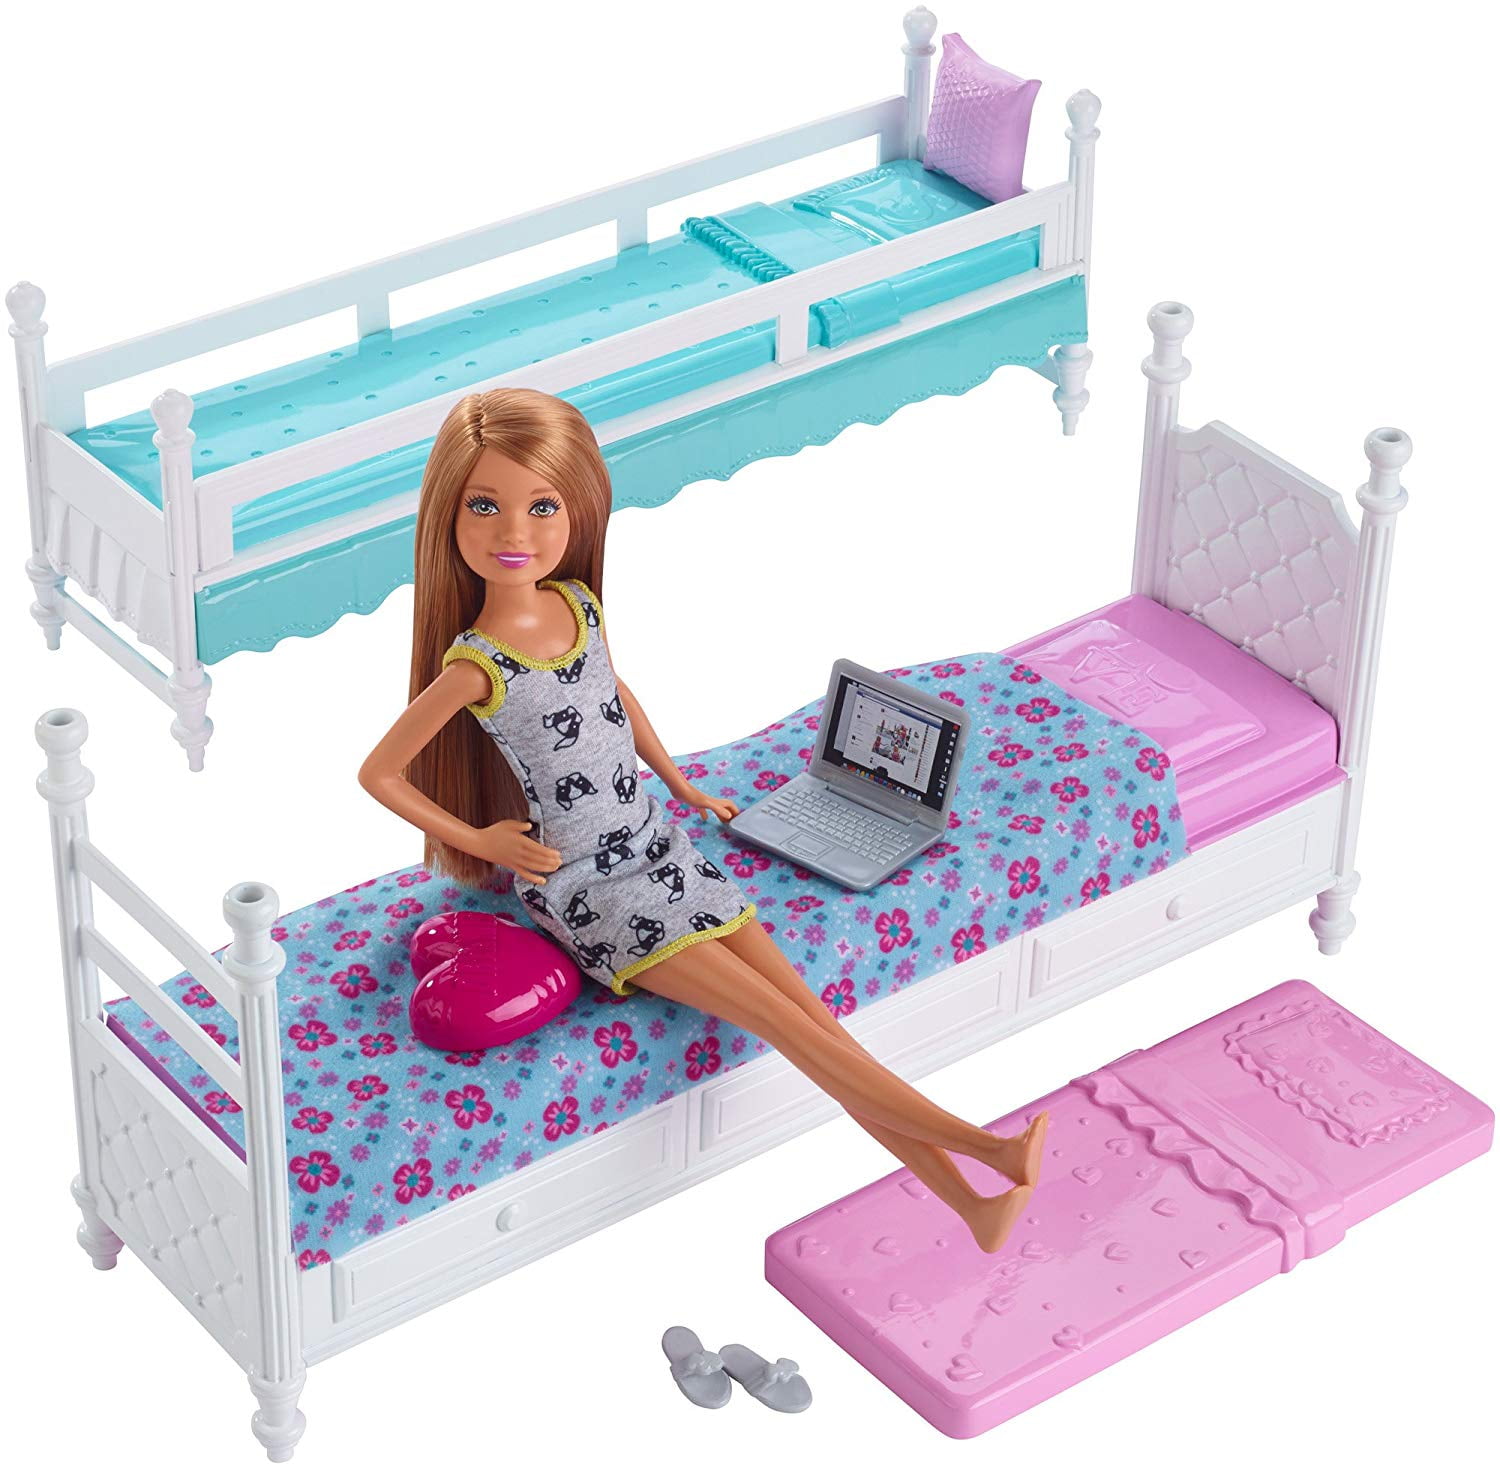 barbie chelsea bunk bed